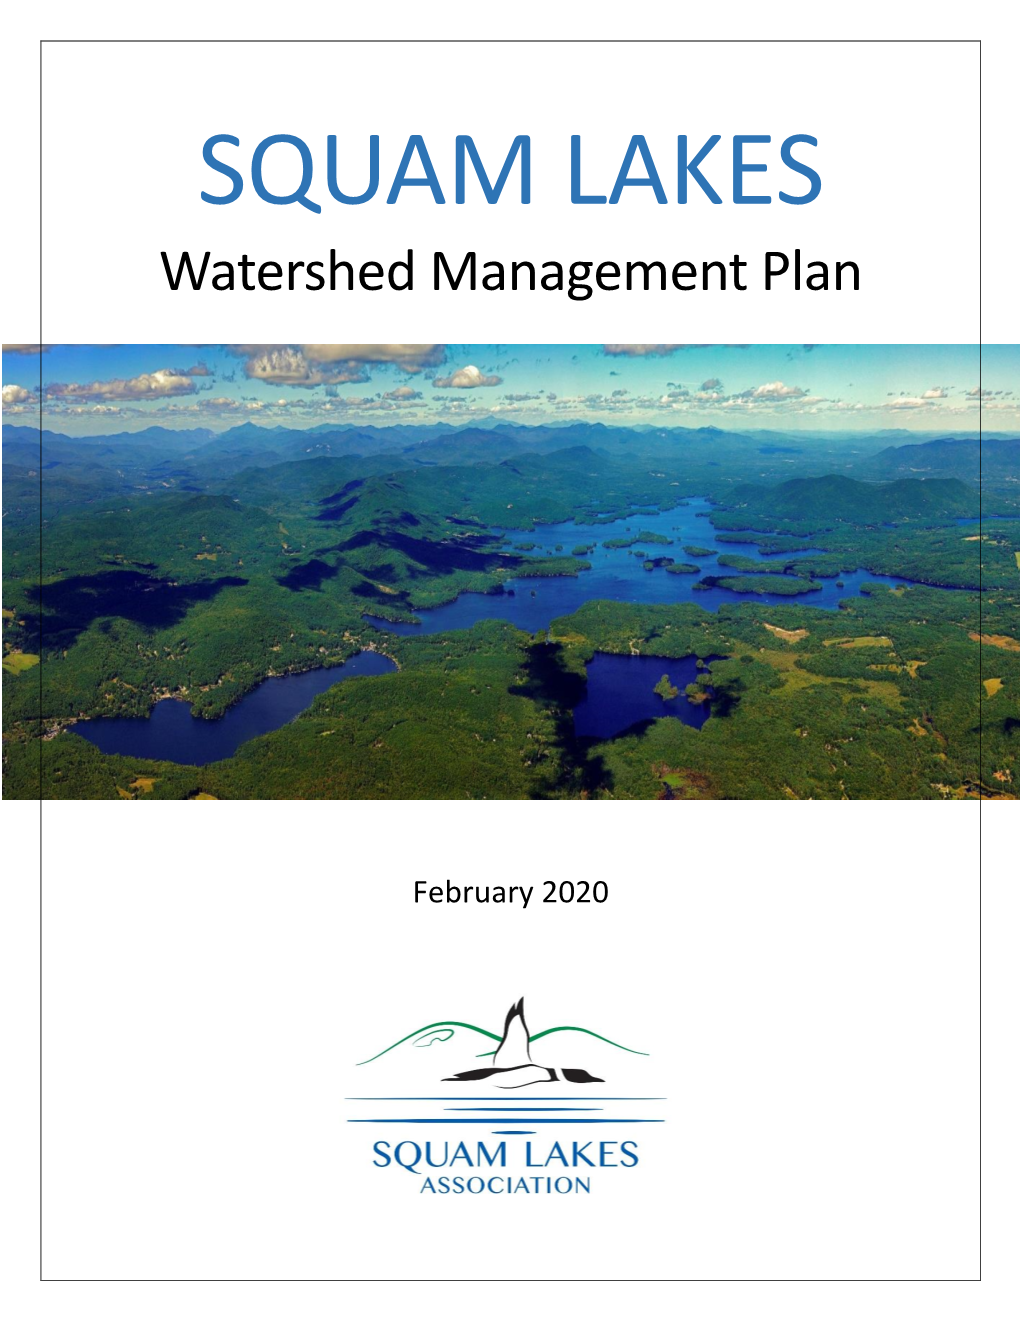 SQUAM LAKES Watershed Management Plan